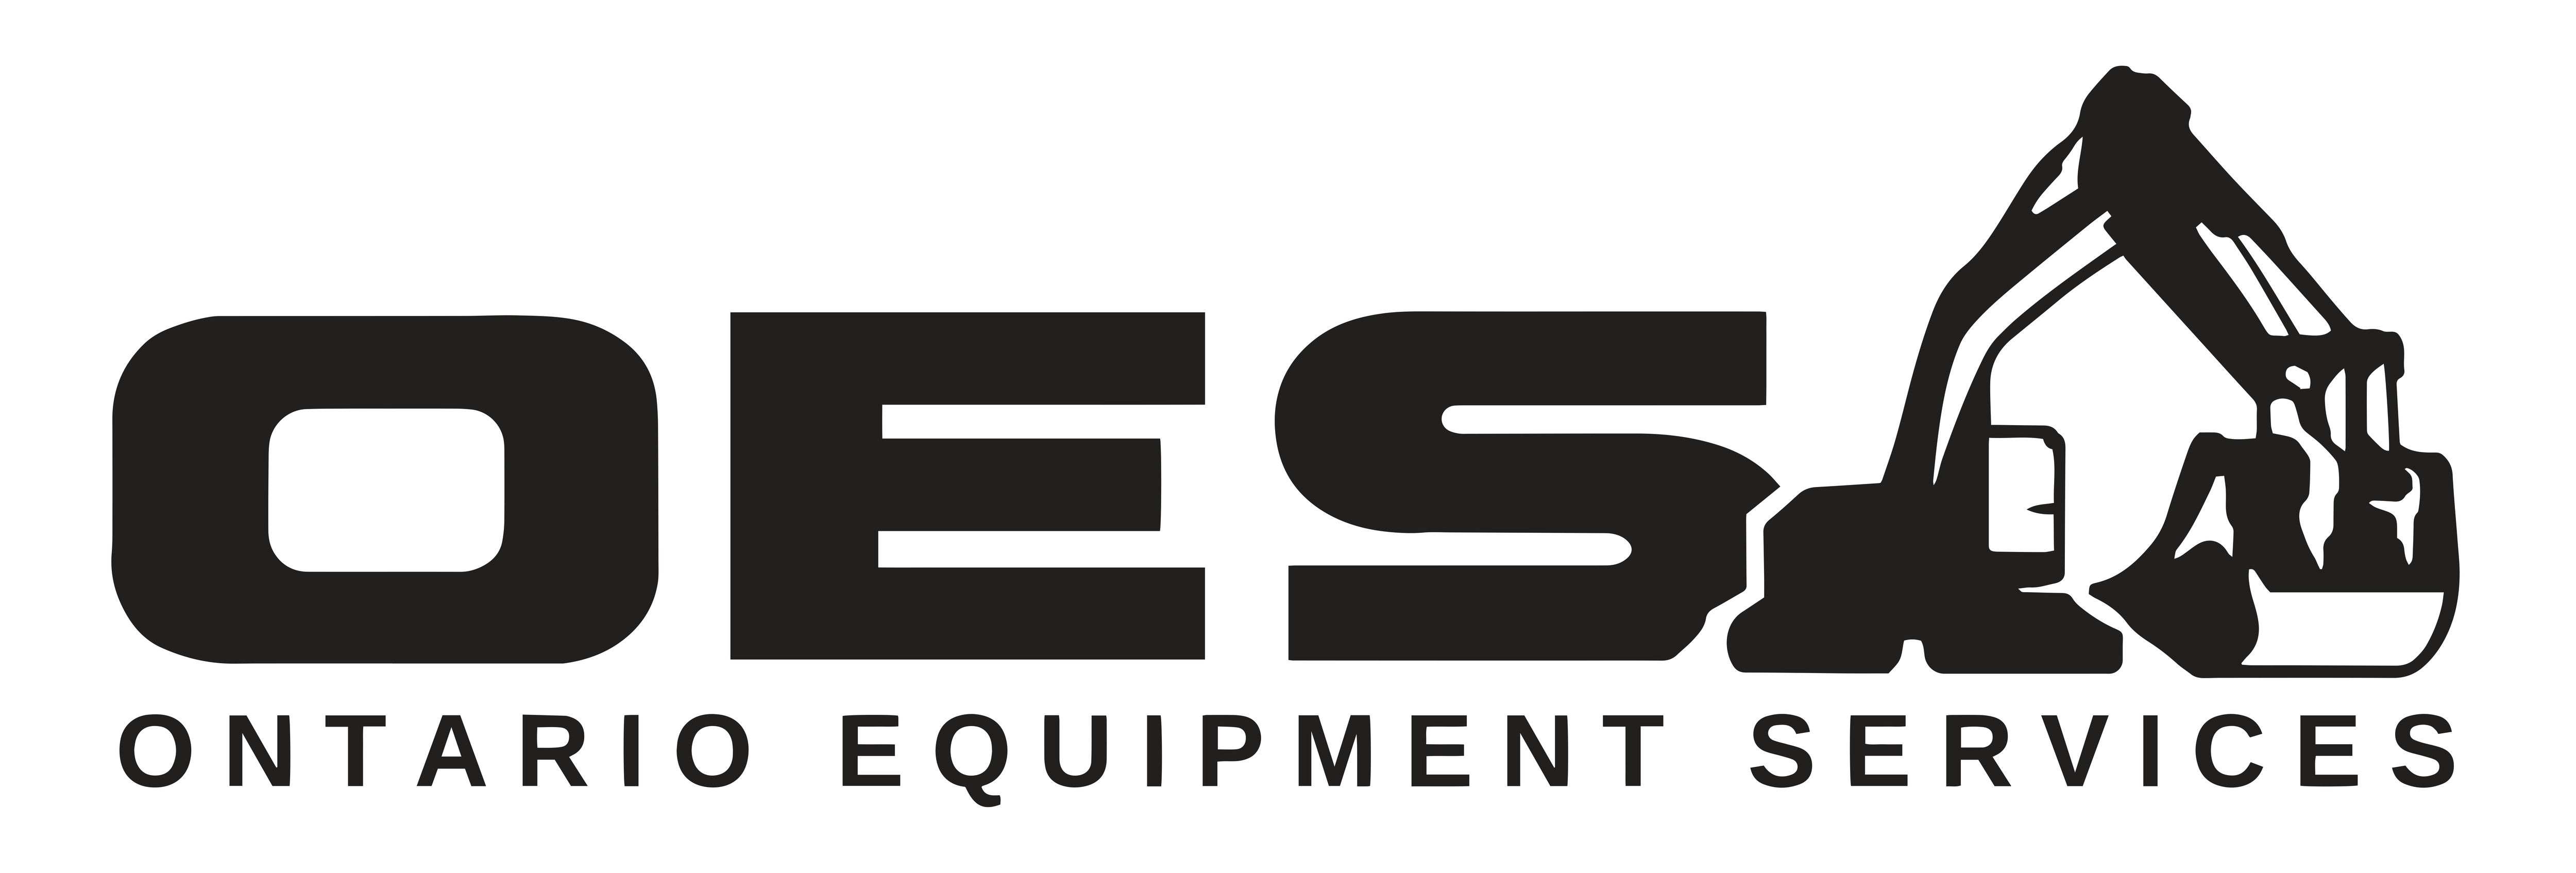 Ontario Equipment Services 